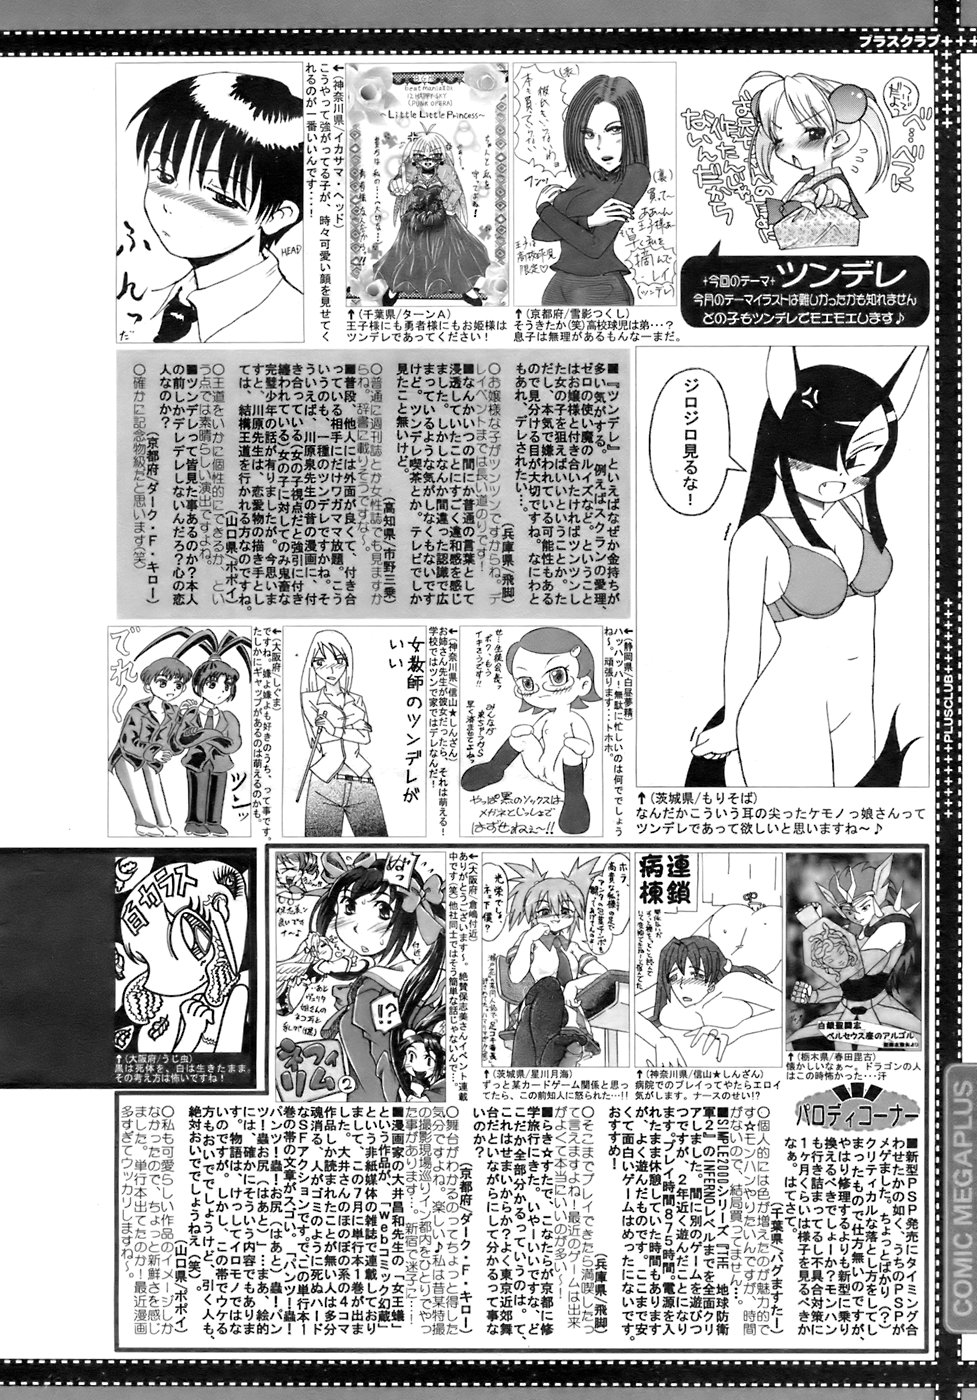 COMIC メガプラス 2007年11月号 第49巻